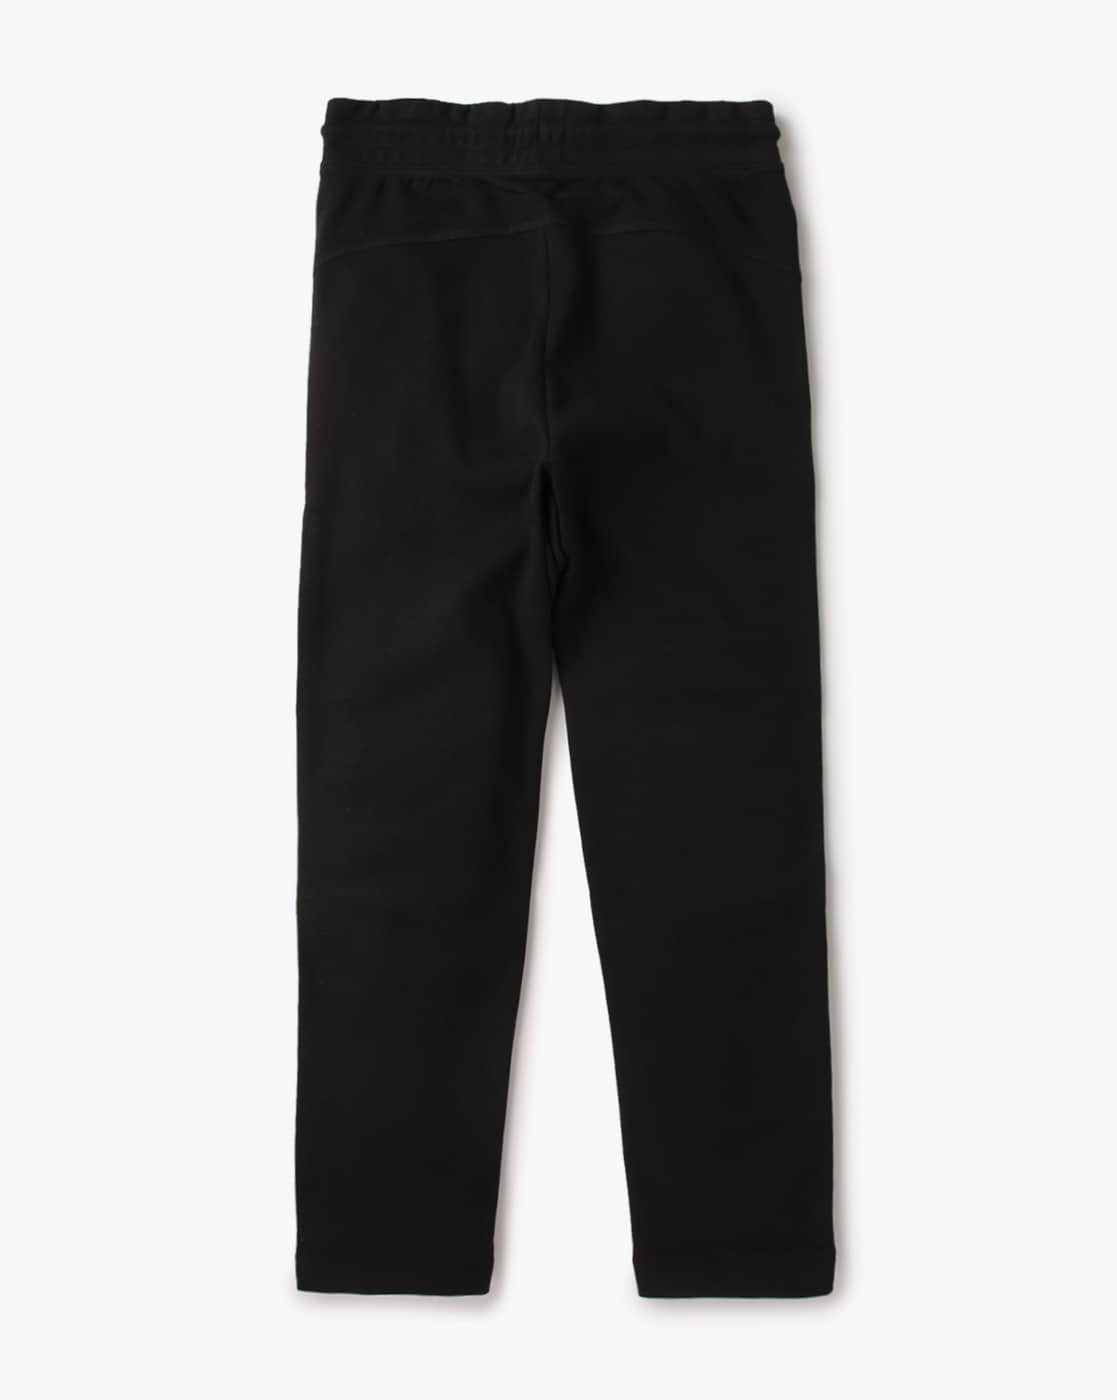 LittleSpring Black Pants Kids School Uniform Pants for Boys Casual Chinos  with Elastic Waist Size 12 - Walmart.com